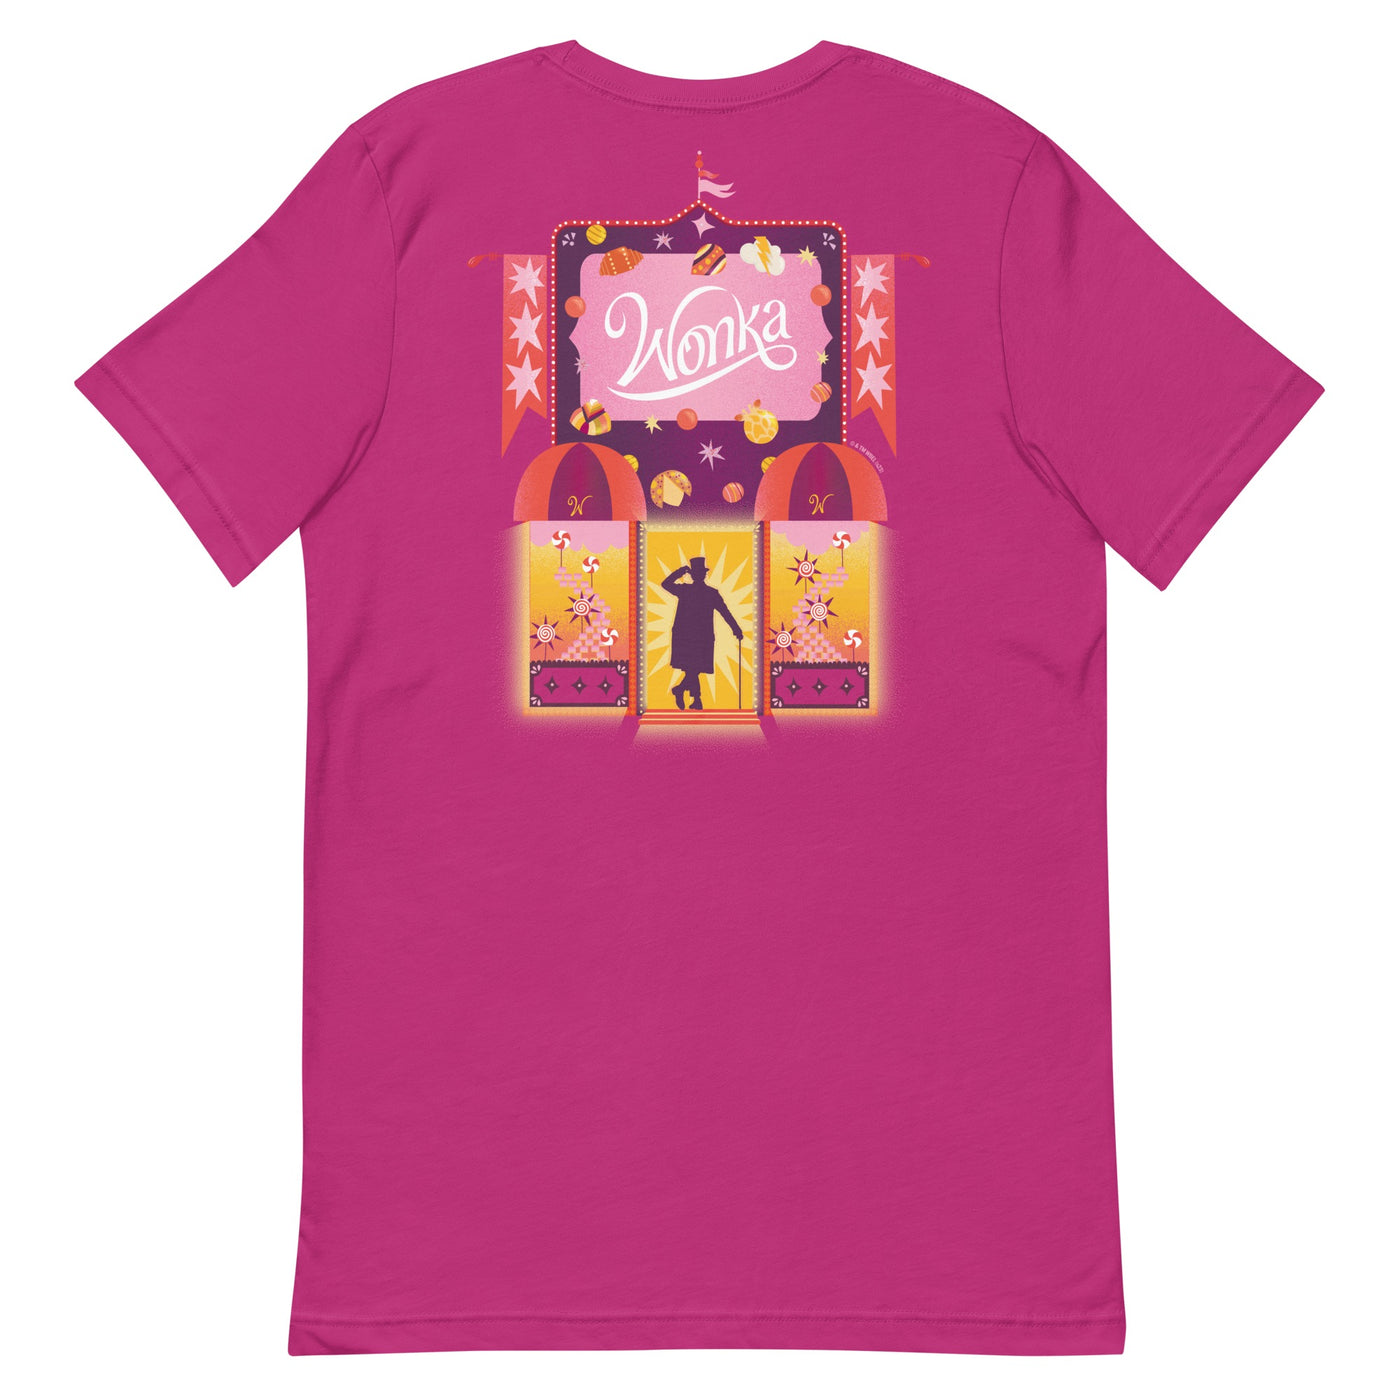 Wonka Storefront Adult T-Shirt